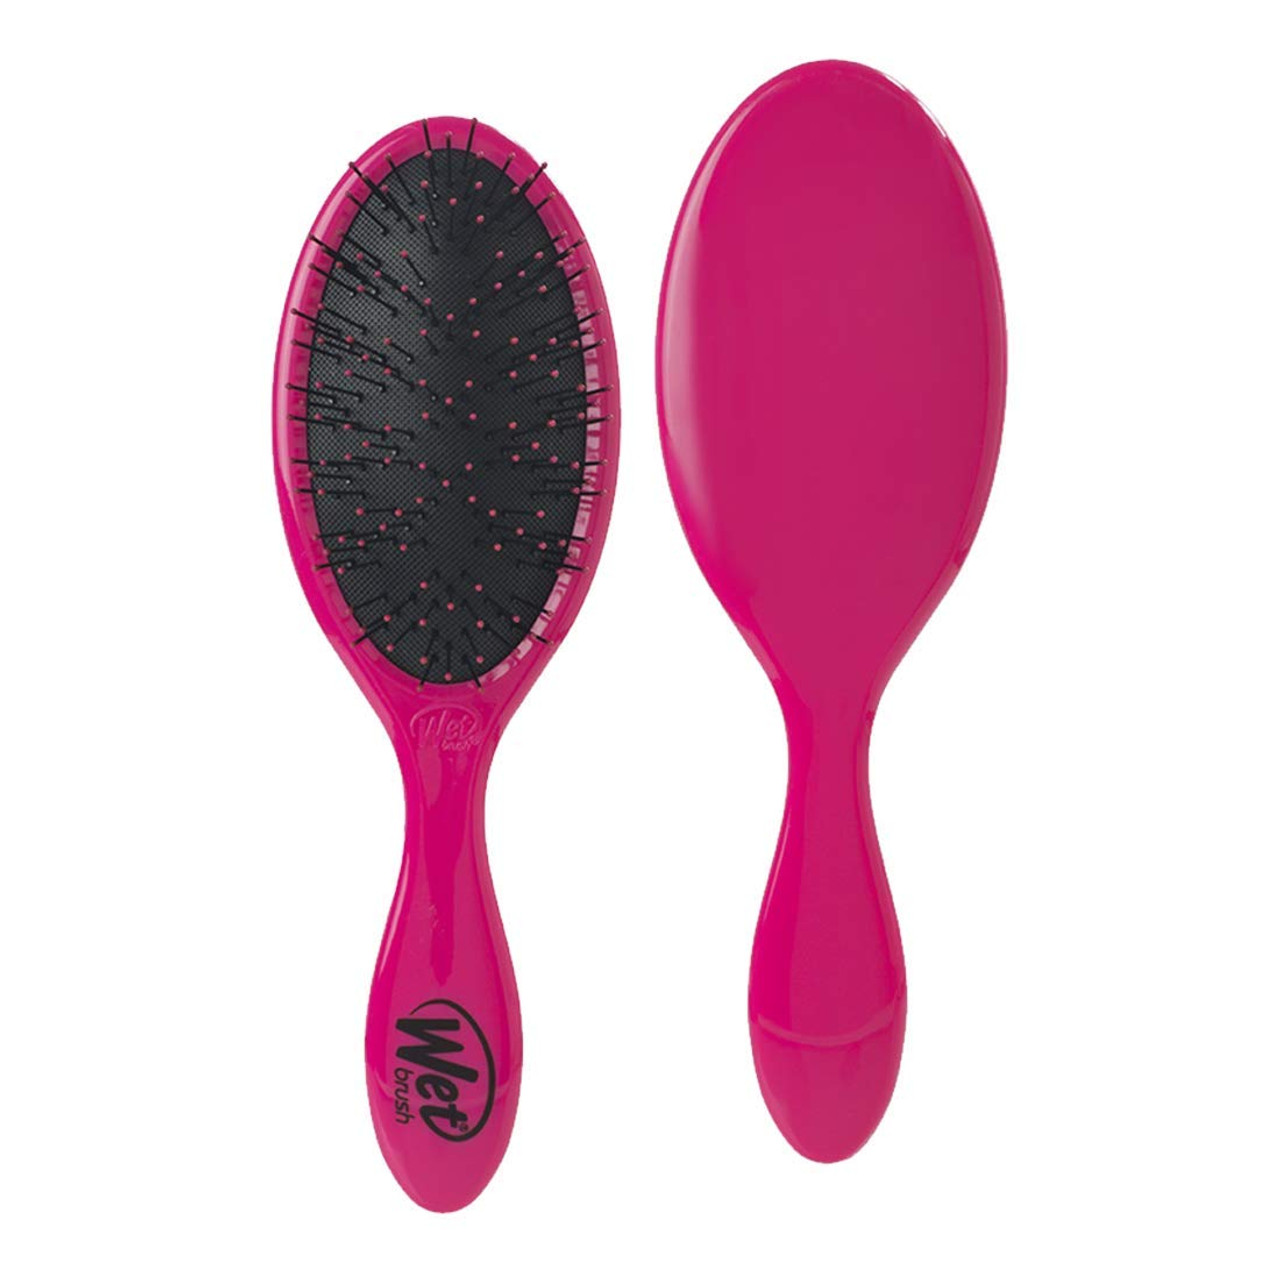 Wet Brush Original Detangler Hair Brush - Pink BWR830CCPK - Jacob